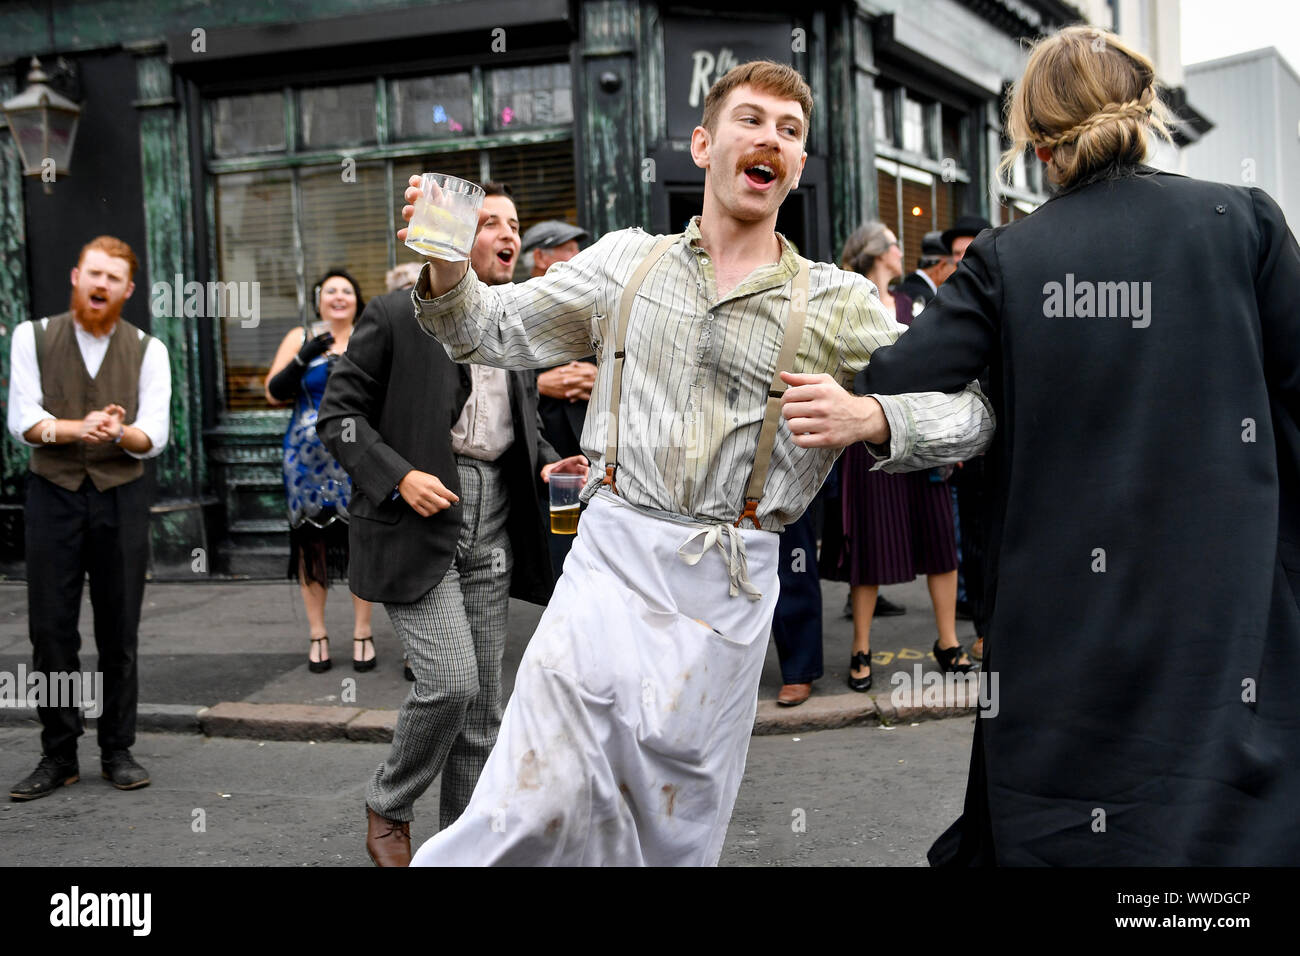 Actors recreate scenes on the streets of Digbeth during the Peaky Blinders Festival, in Birmingham. Stock Photo